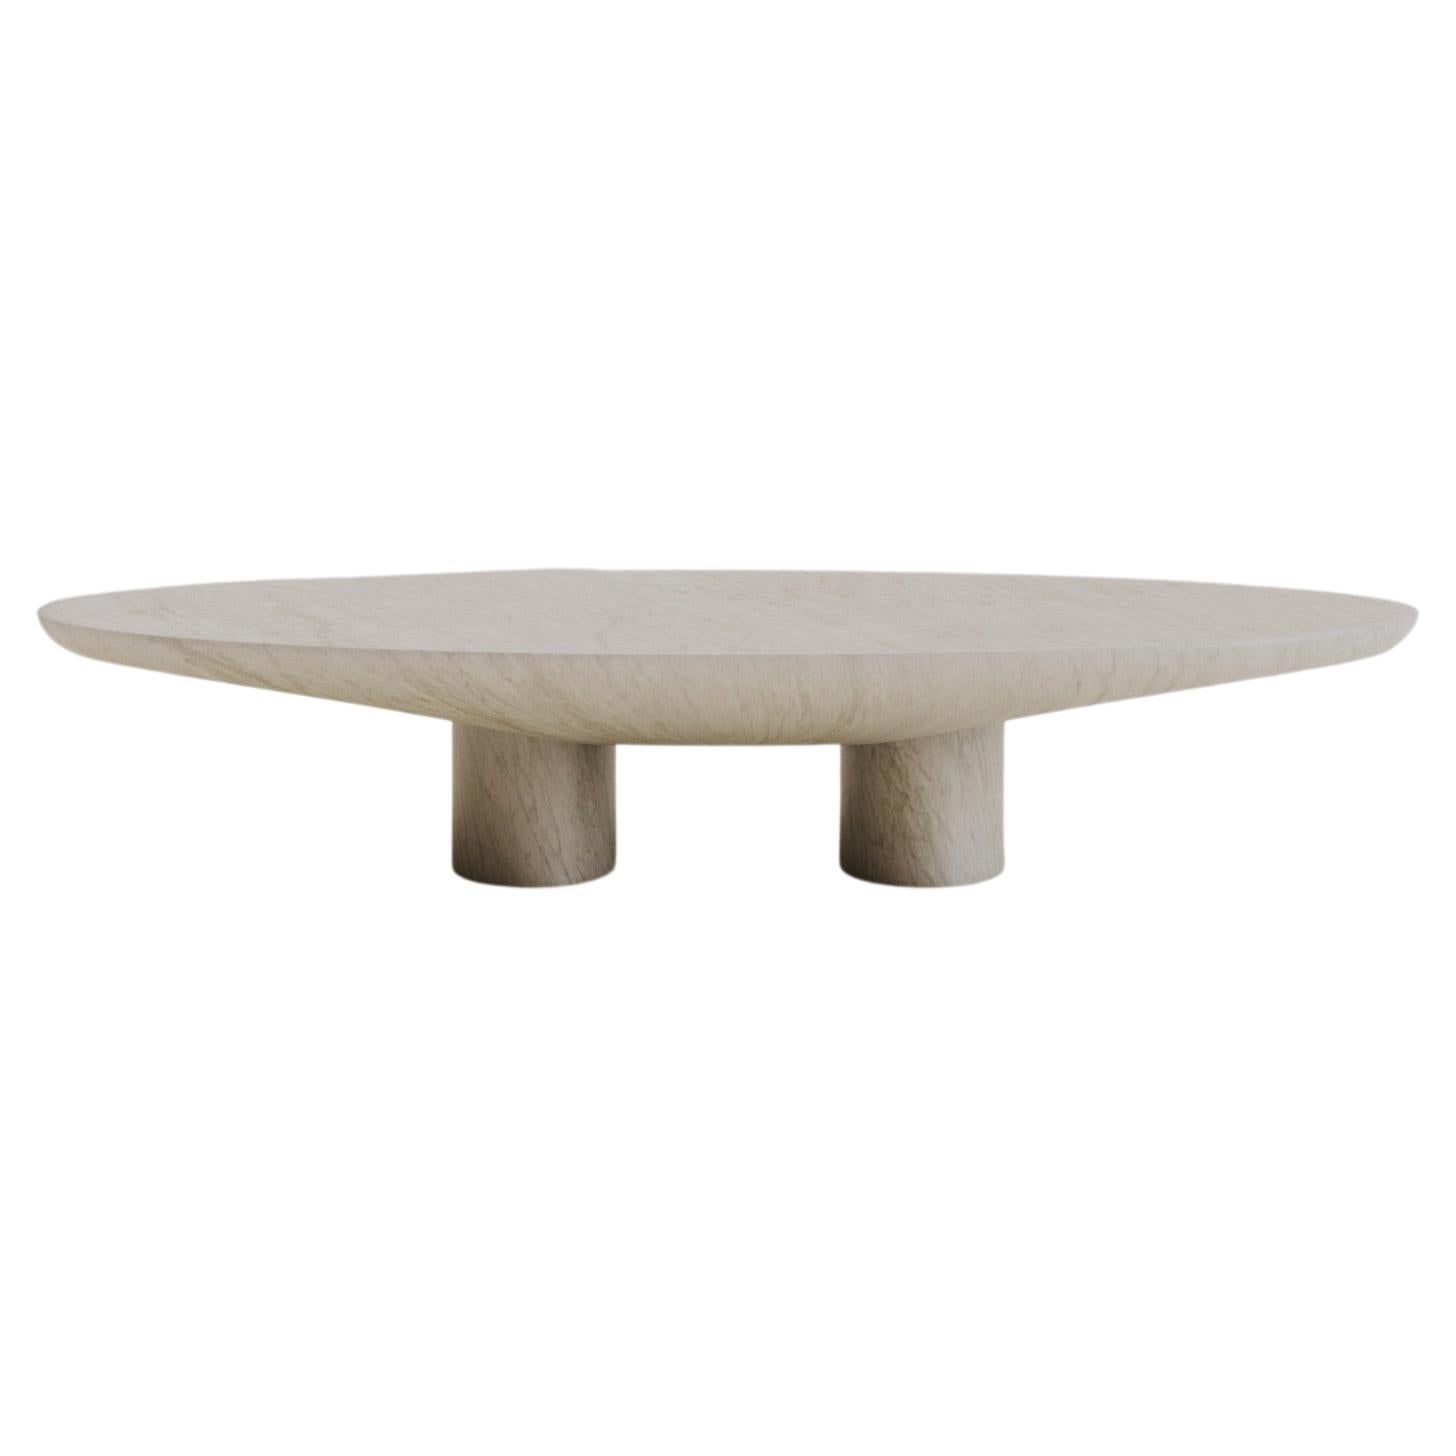 Solid White Marble Abraccio Oval Coffee Table 140 by Studio Narra